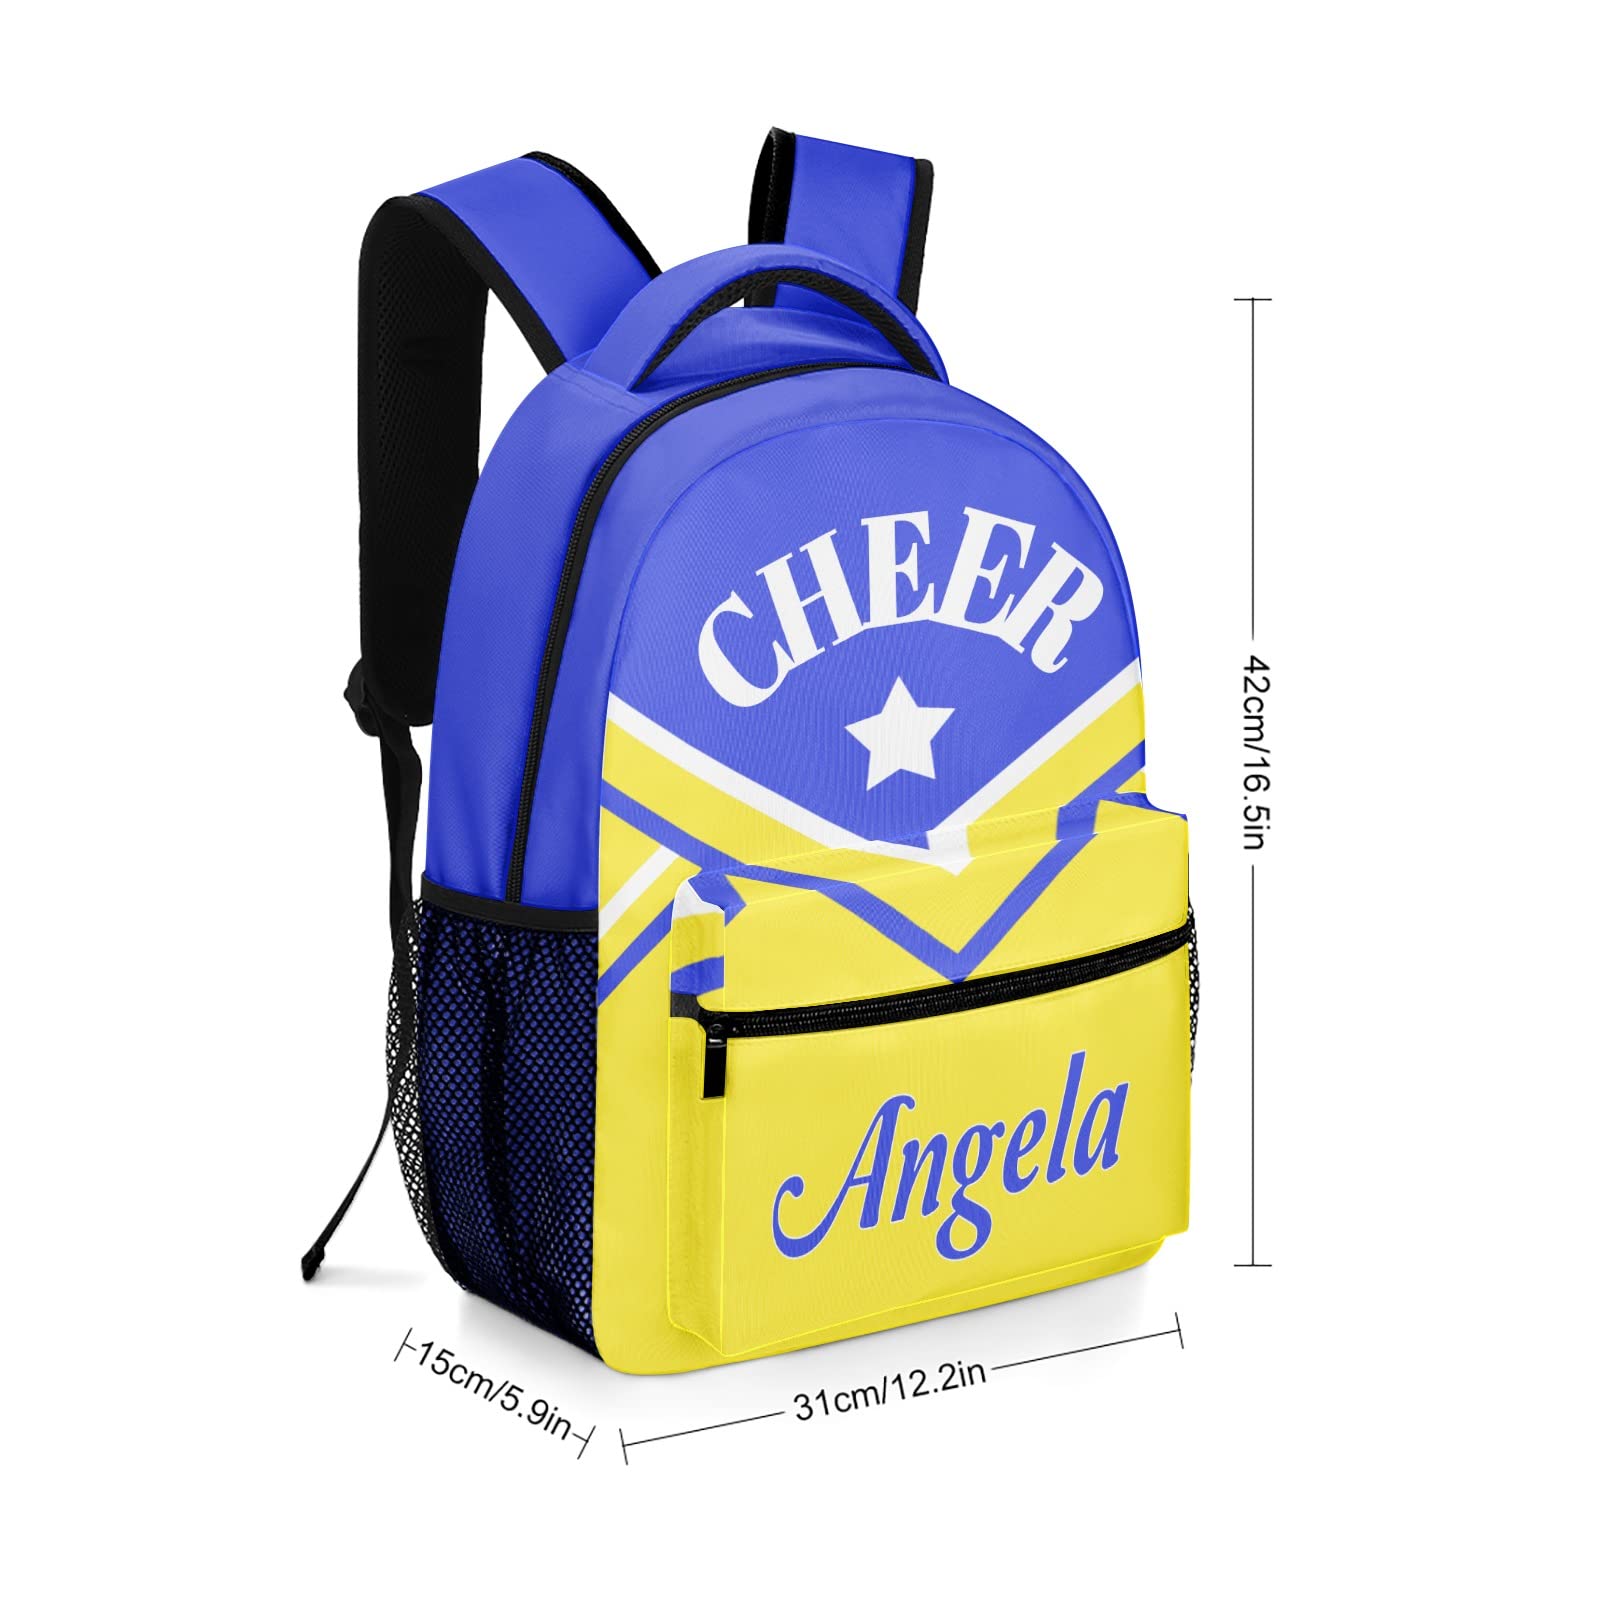 XOZOTY Cheerleader Backpack Personalized Custom Book Bags with Name Cheer Cheerleading Blue Yellow